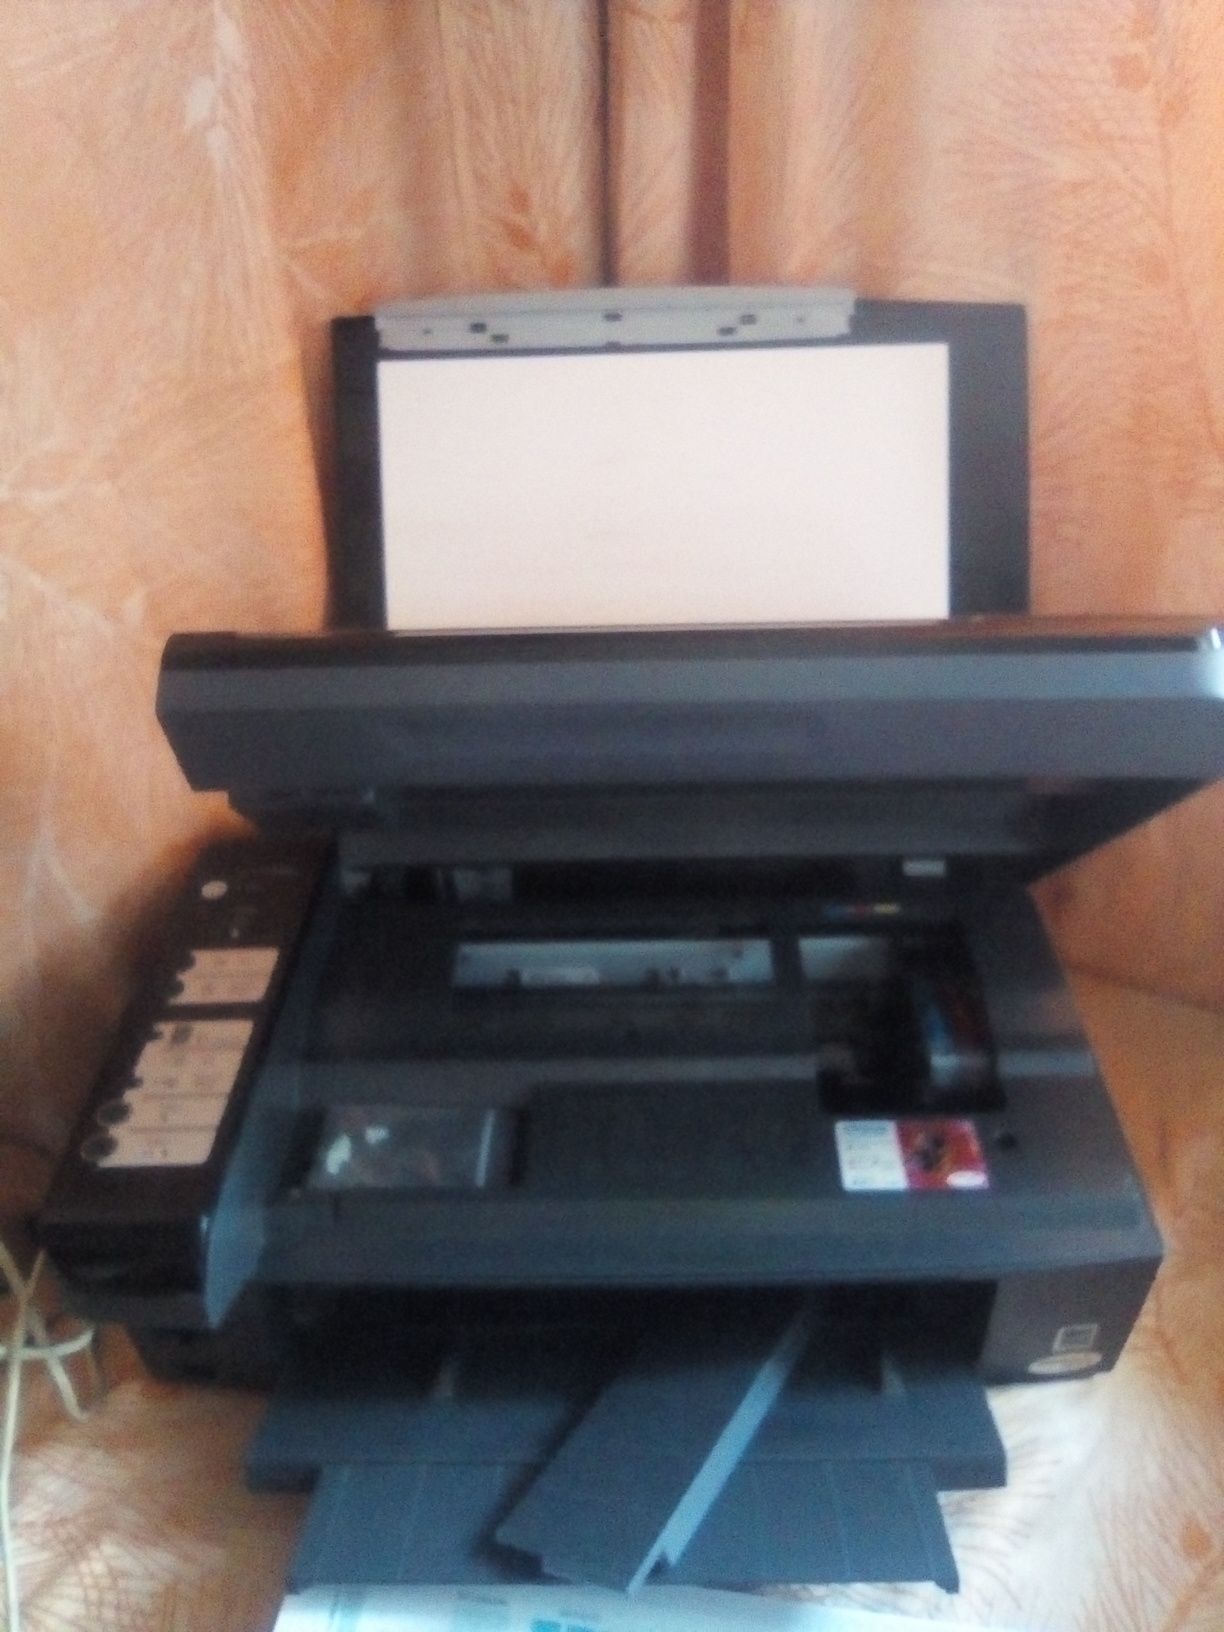 Принтер Epson cx7300